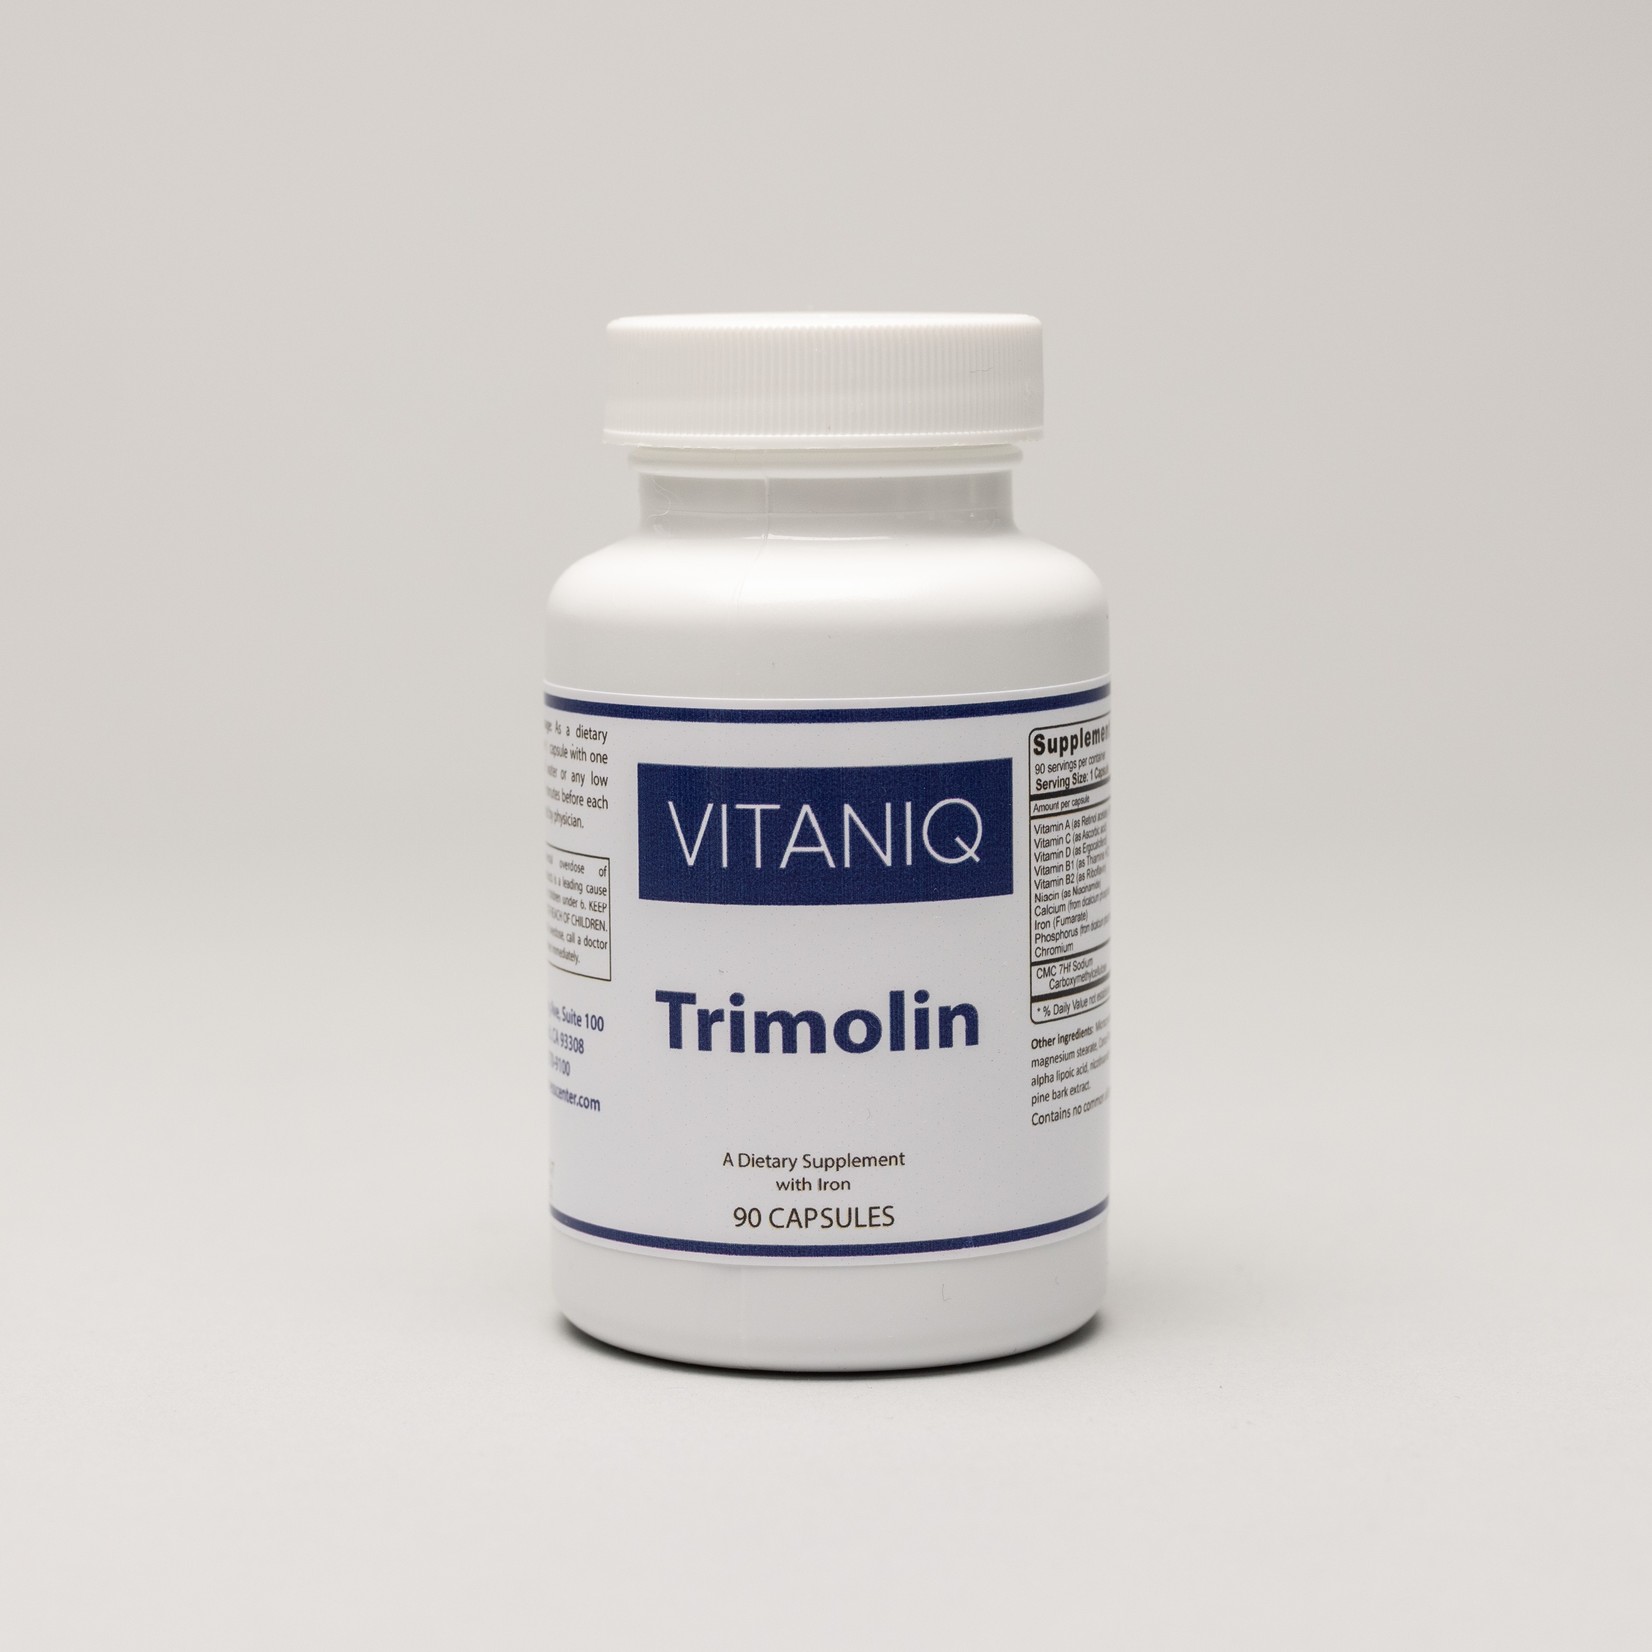 Trimolin